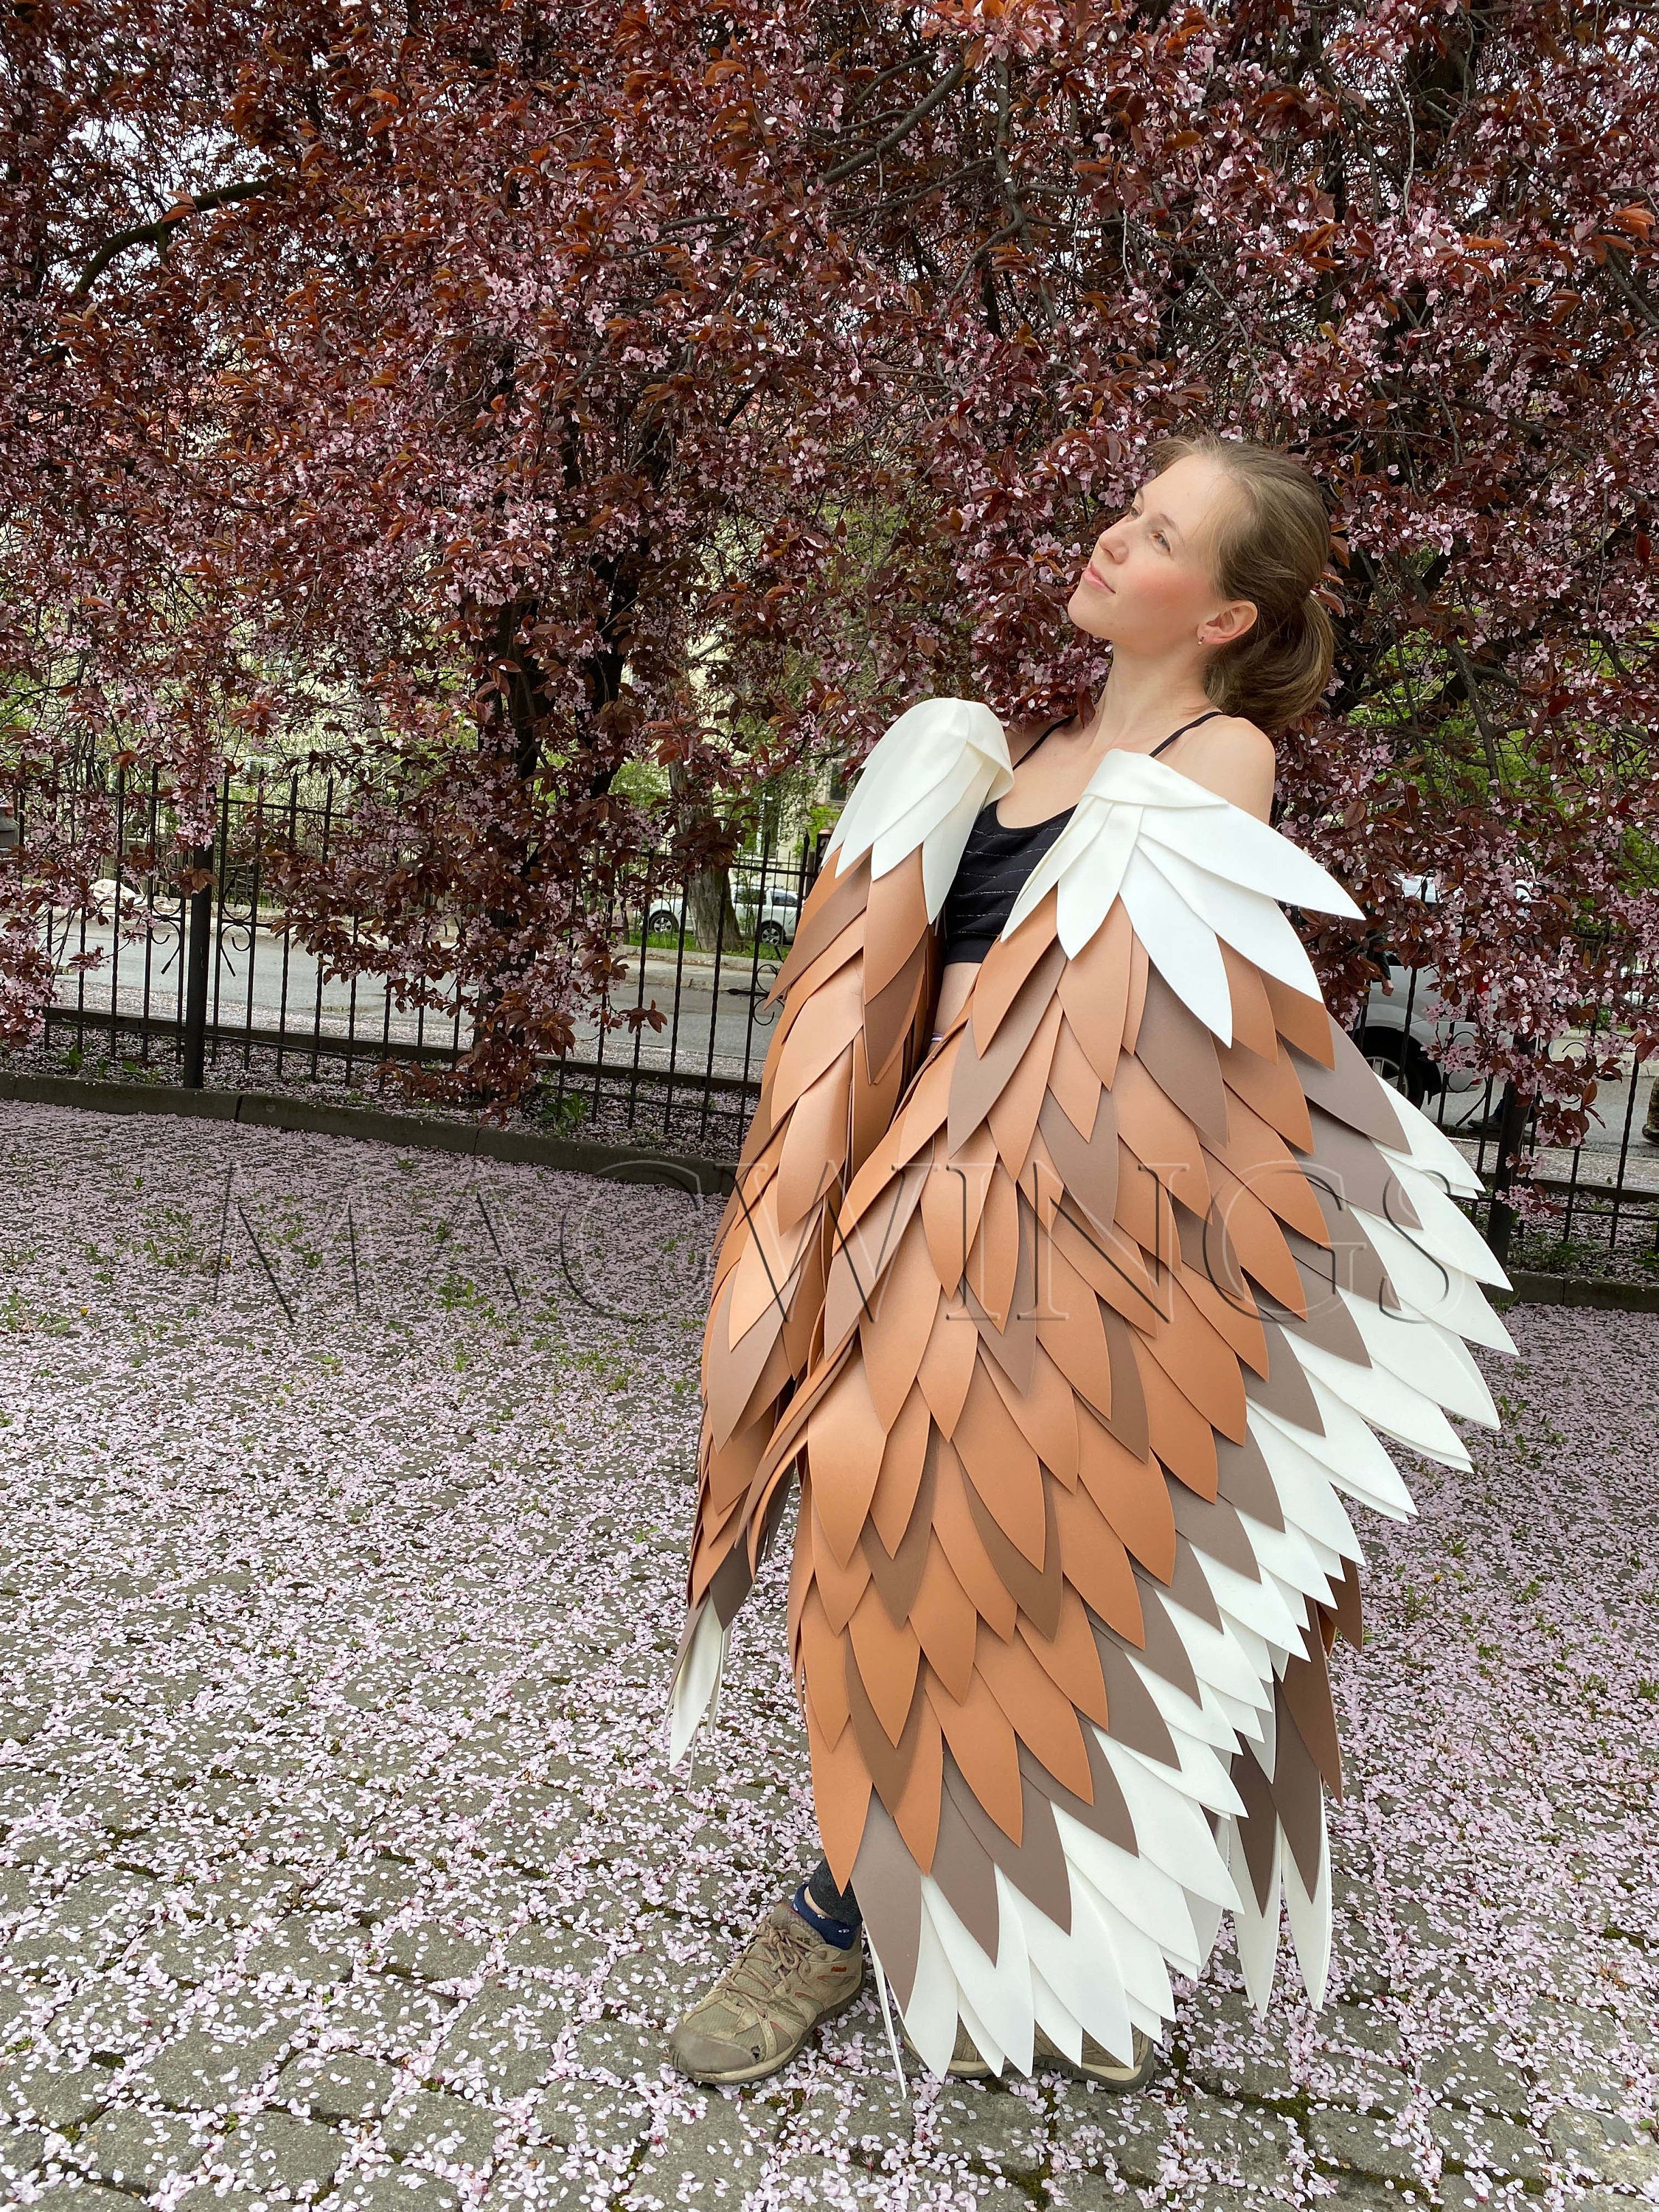 Women's Elegant Eagle Costume, Size: Small, Brown